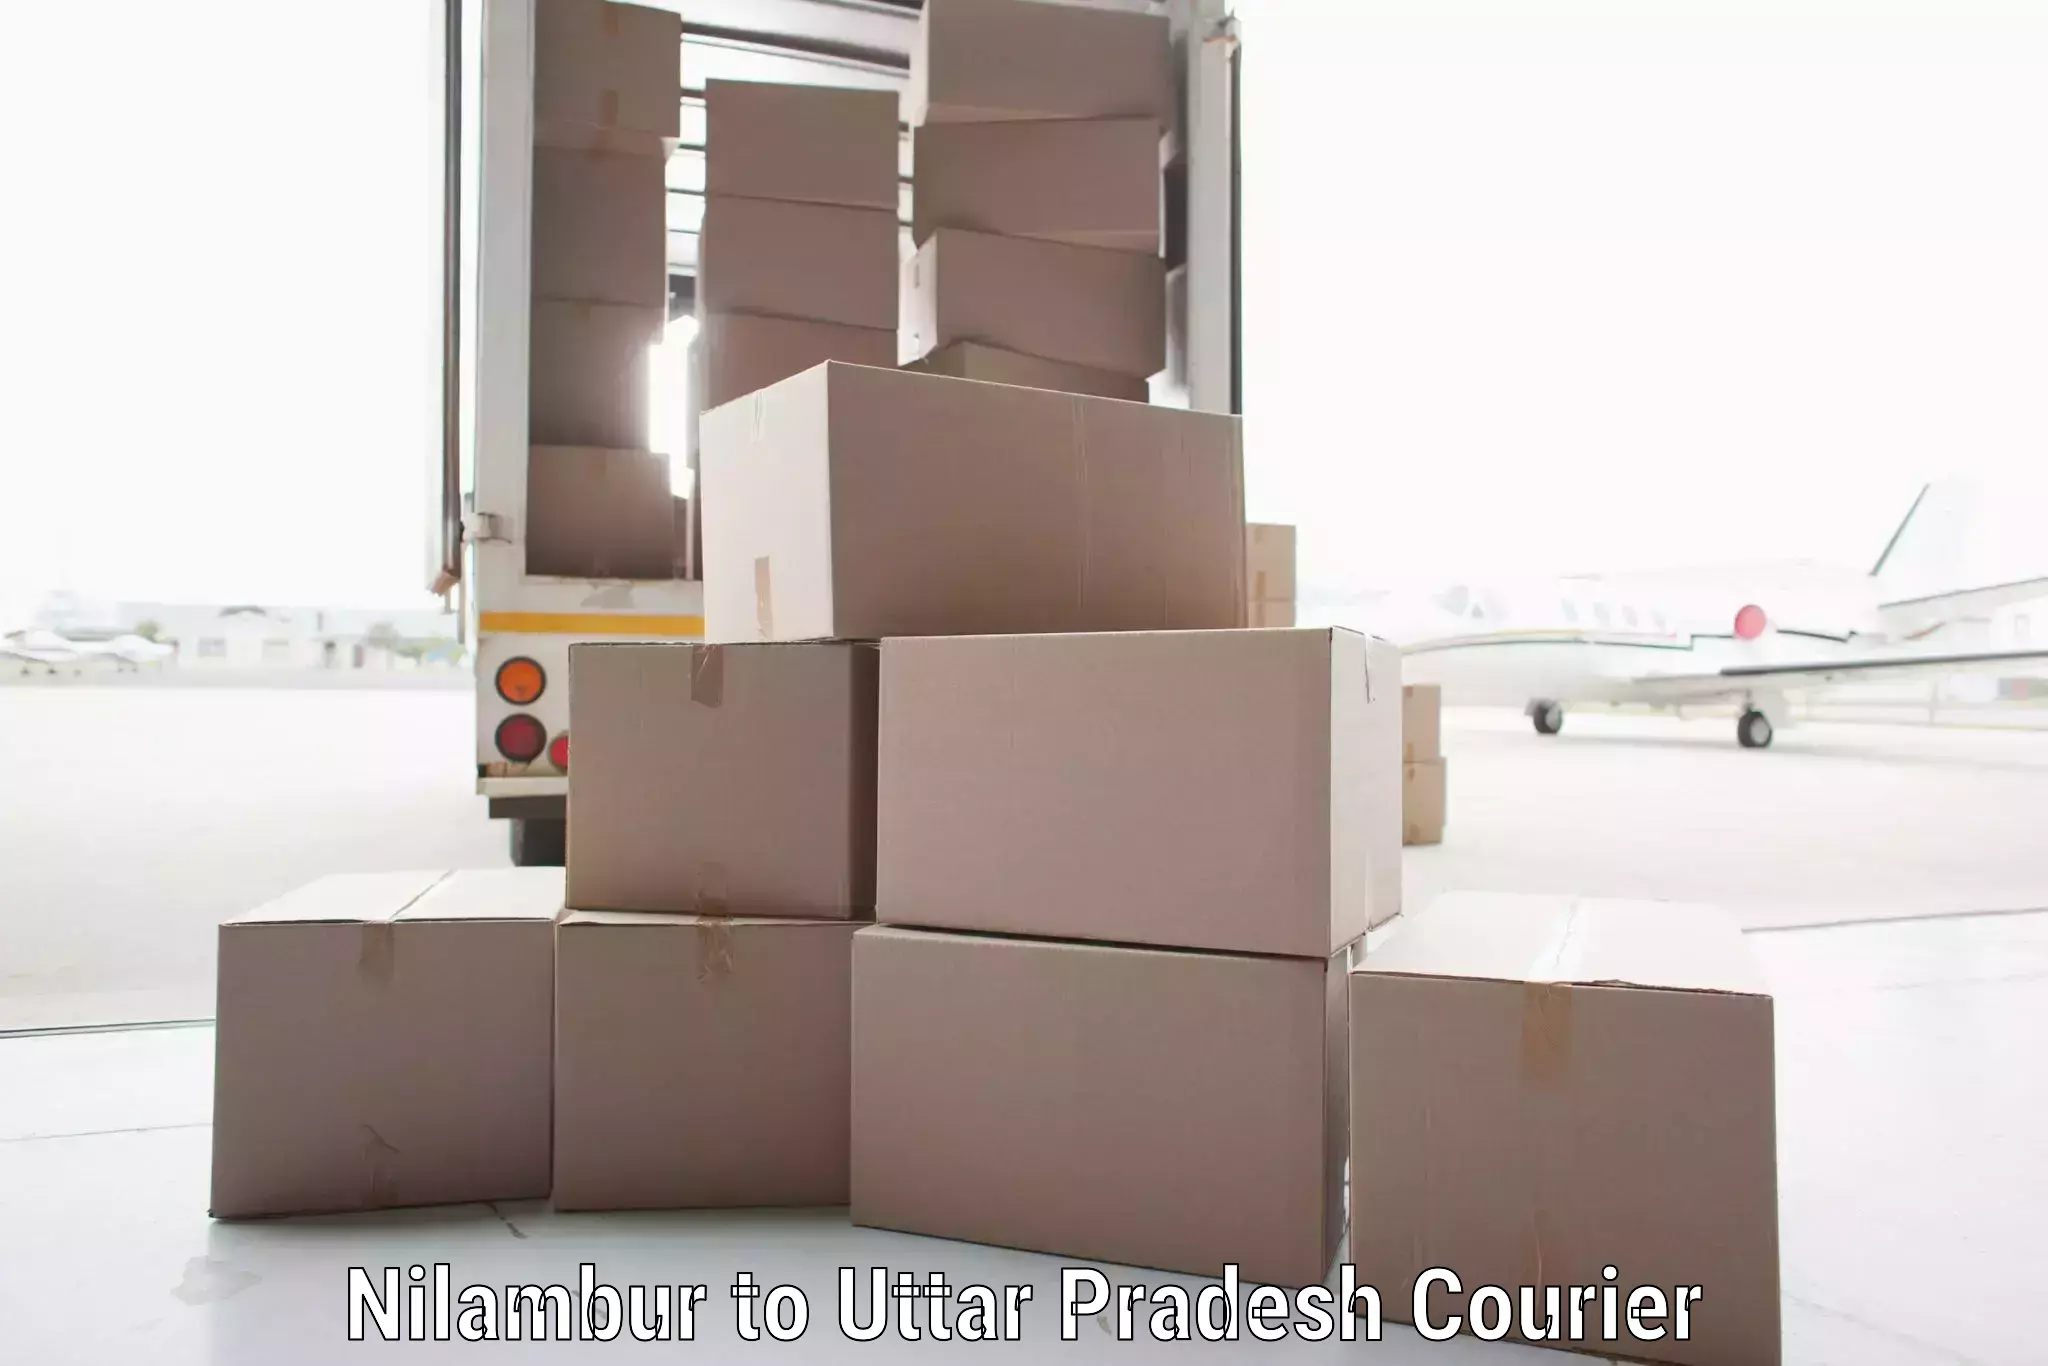 State-of-the-art courier technology Nilambur to Khatauli